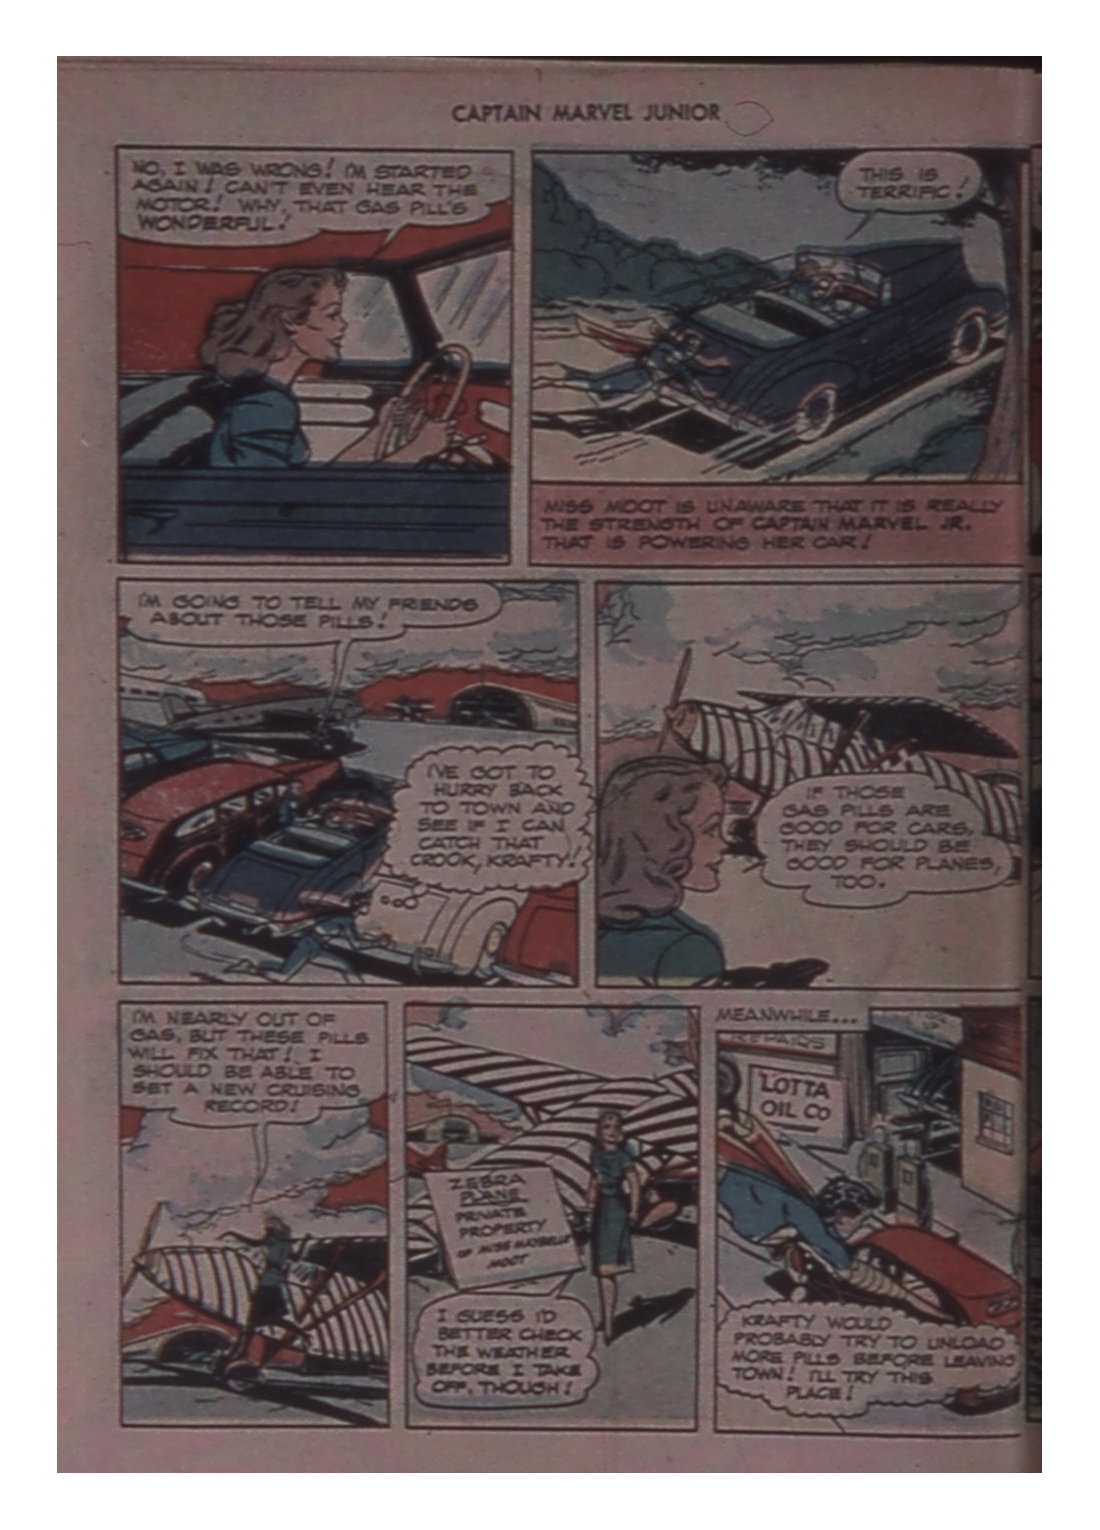 Read online Captain Marvel, Jr. comic -  Issue #65 - 46